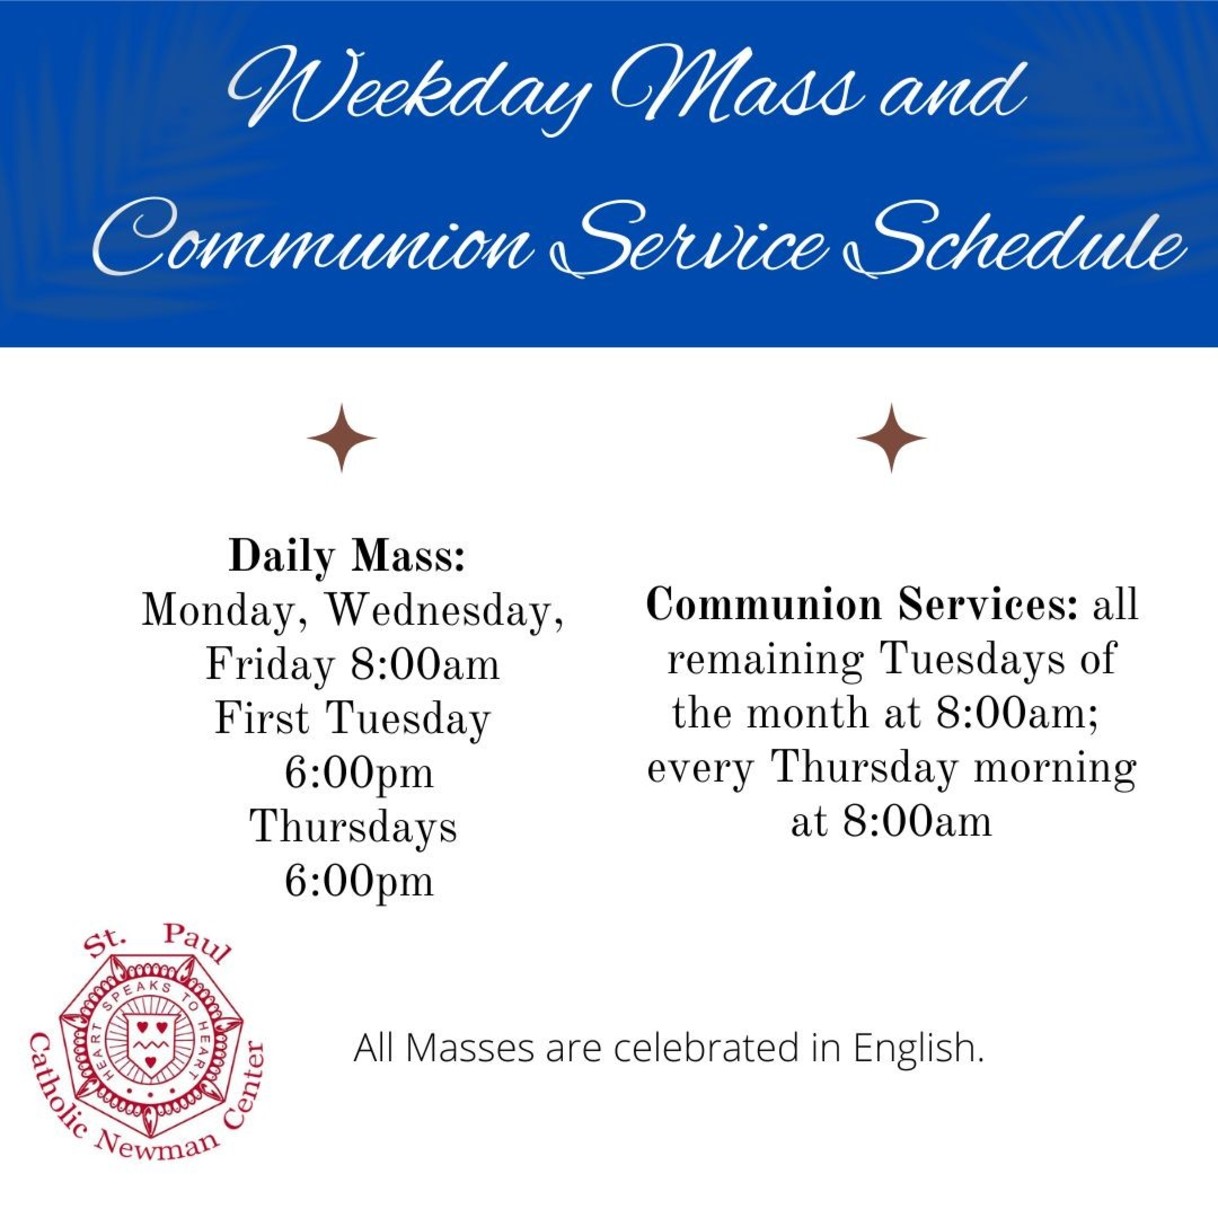 Weekday Mass And Communion Service Schedule